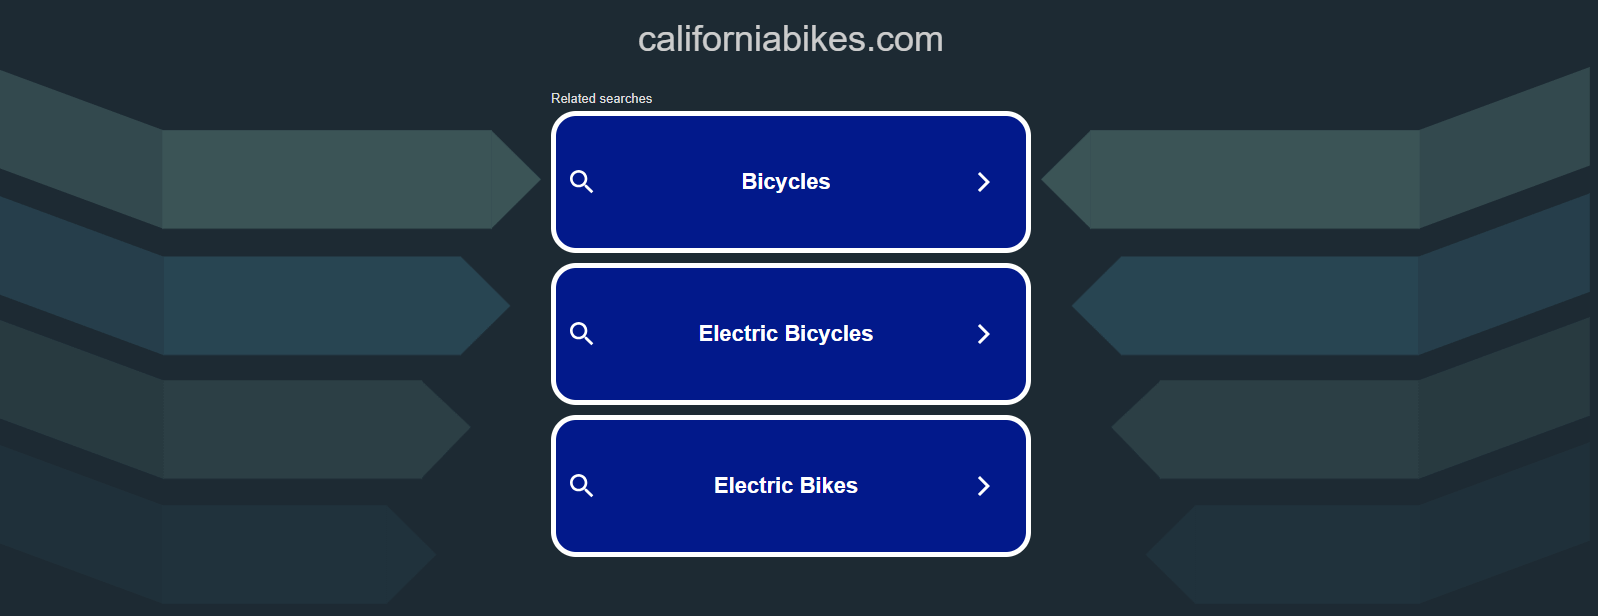 You can park a domain for a new business idea, like californiabikes.com.